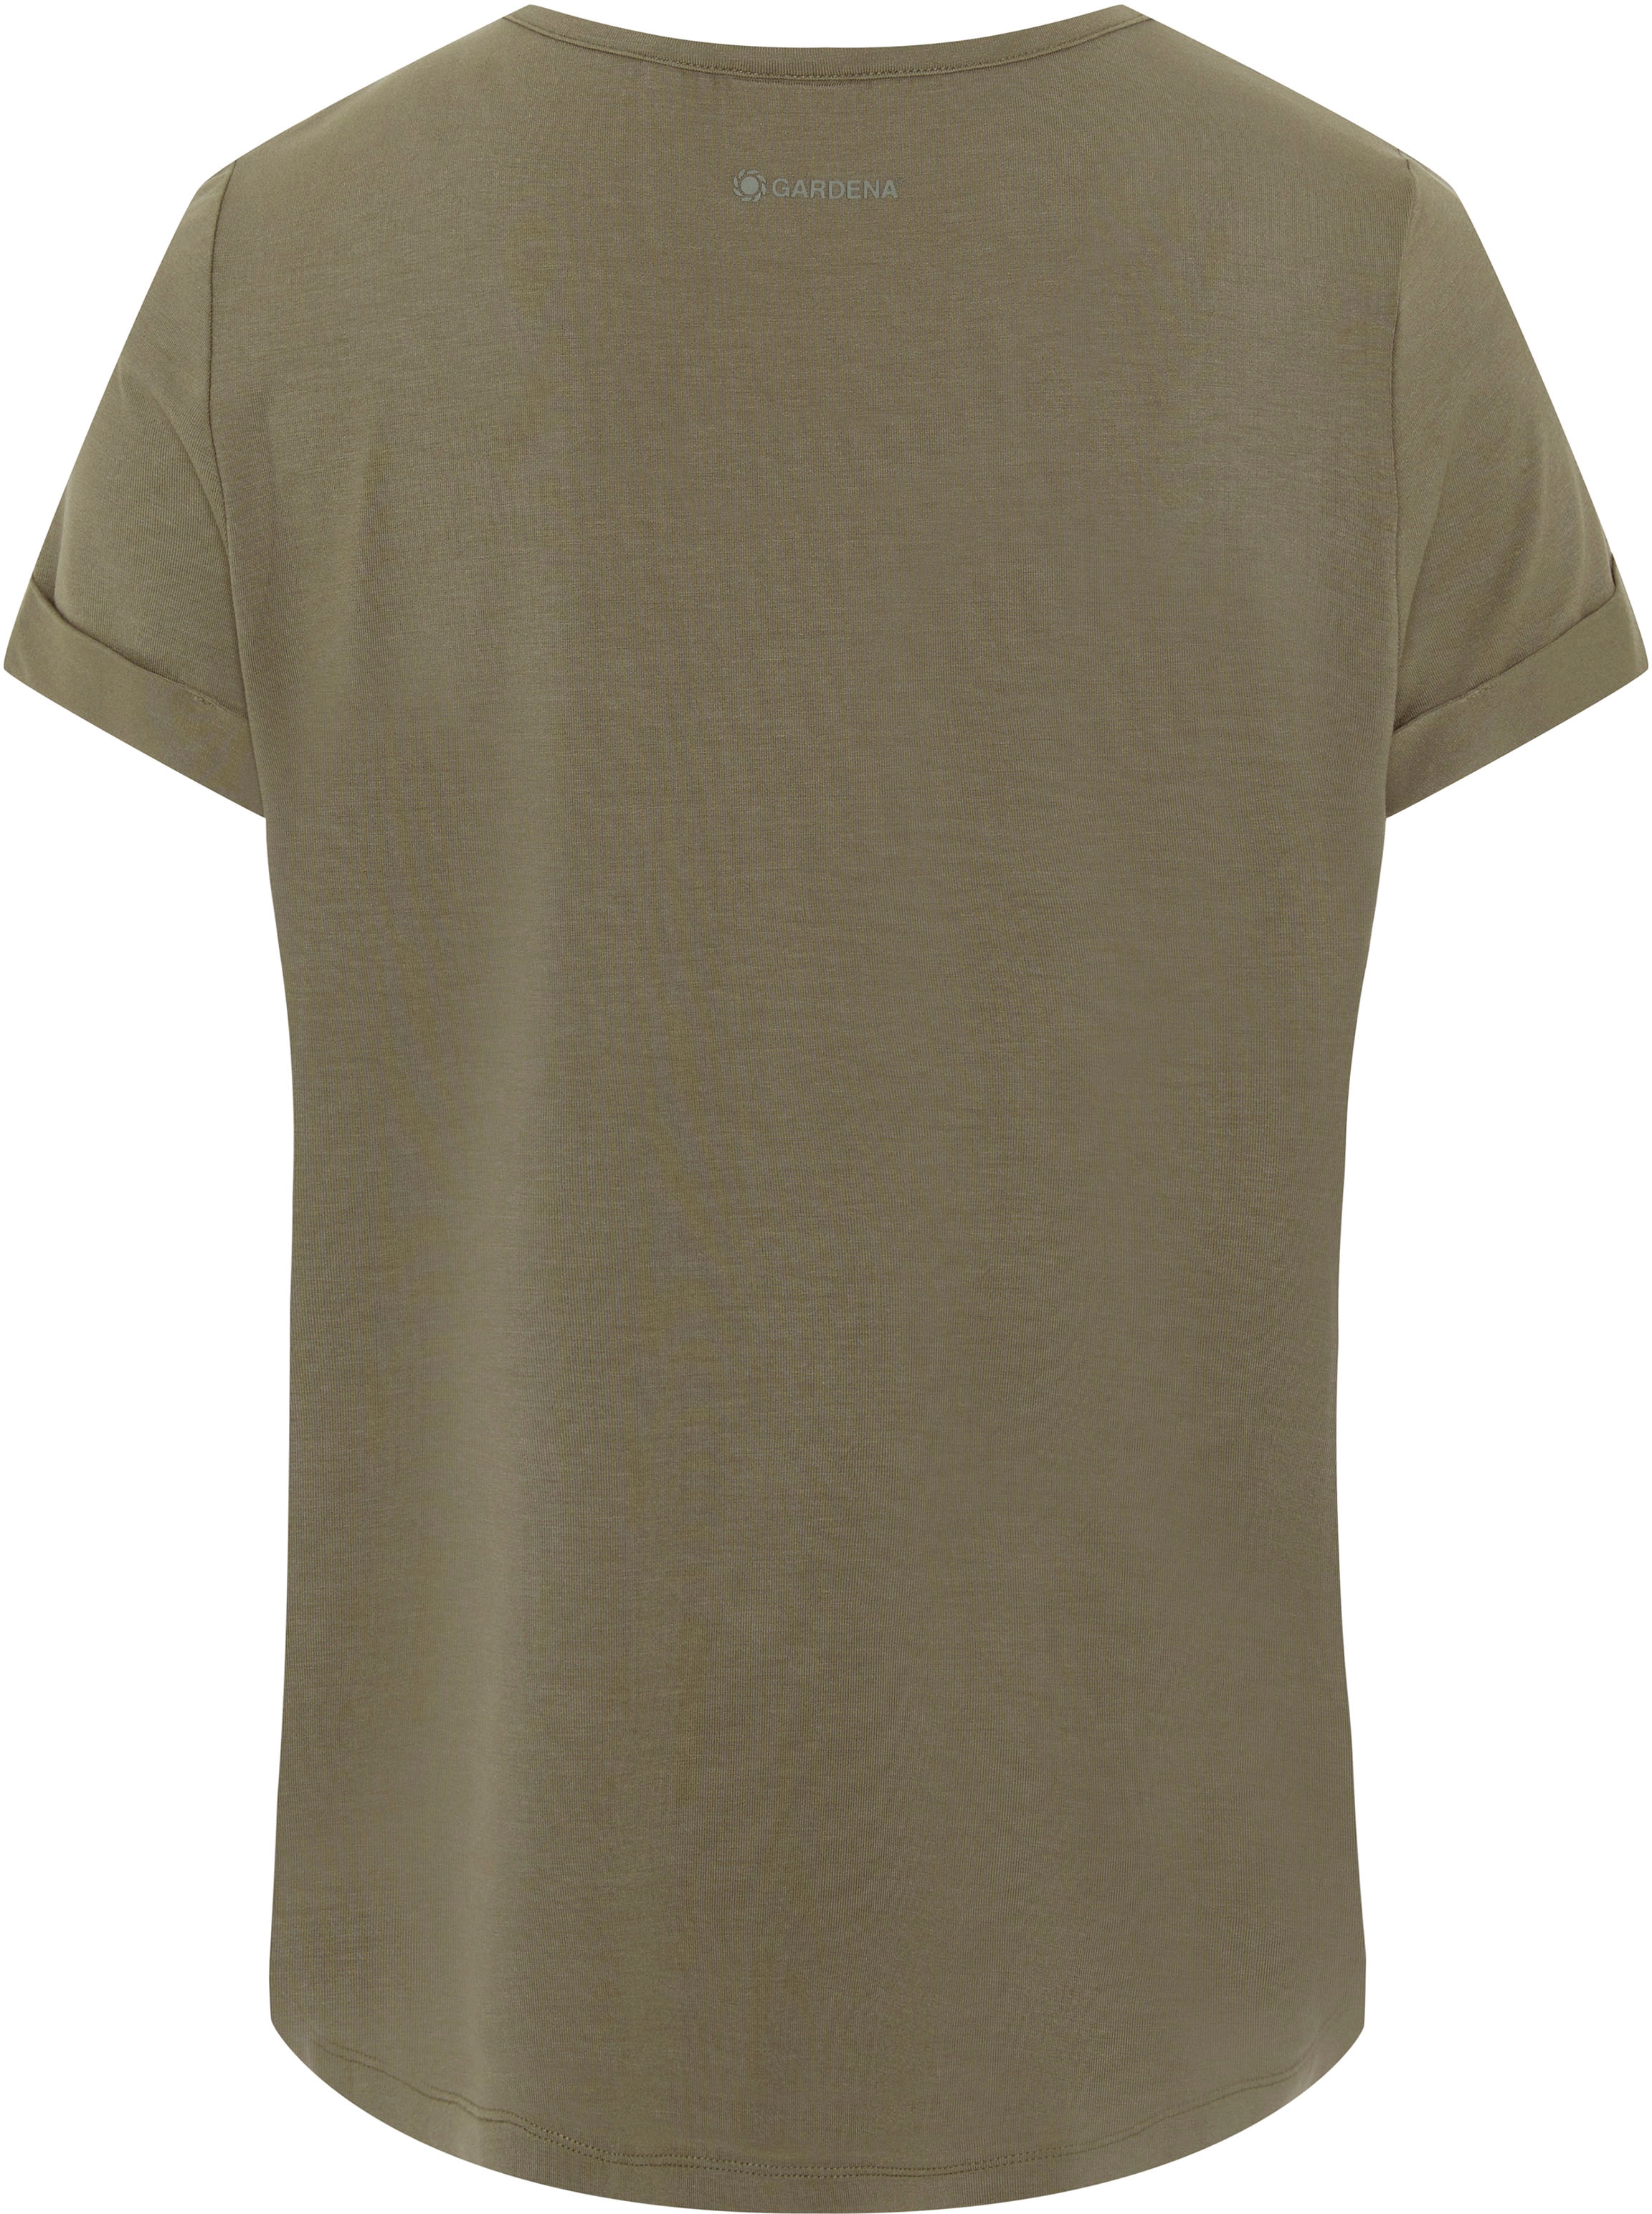 Gardena Damen-T-Shirt XS Dusty Olive kaufen bei OBI